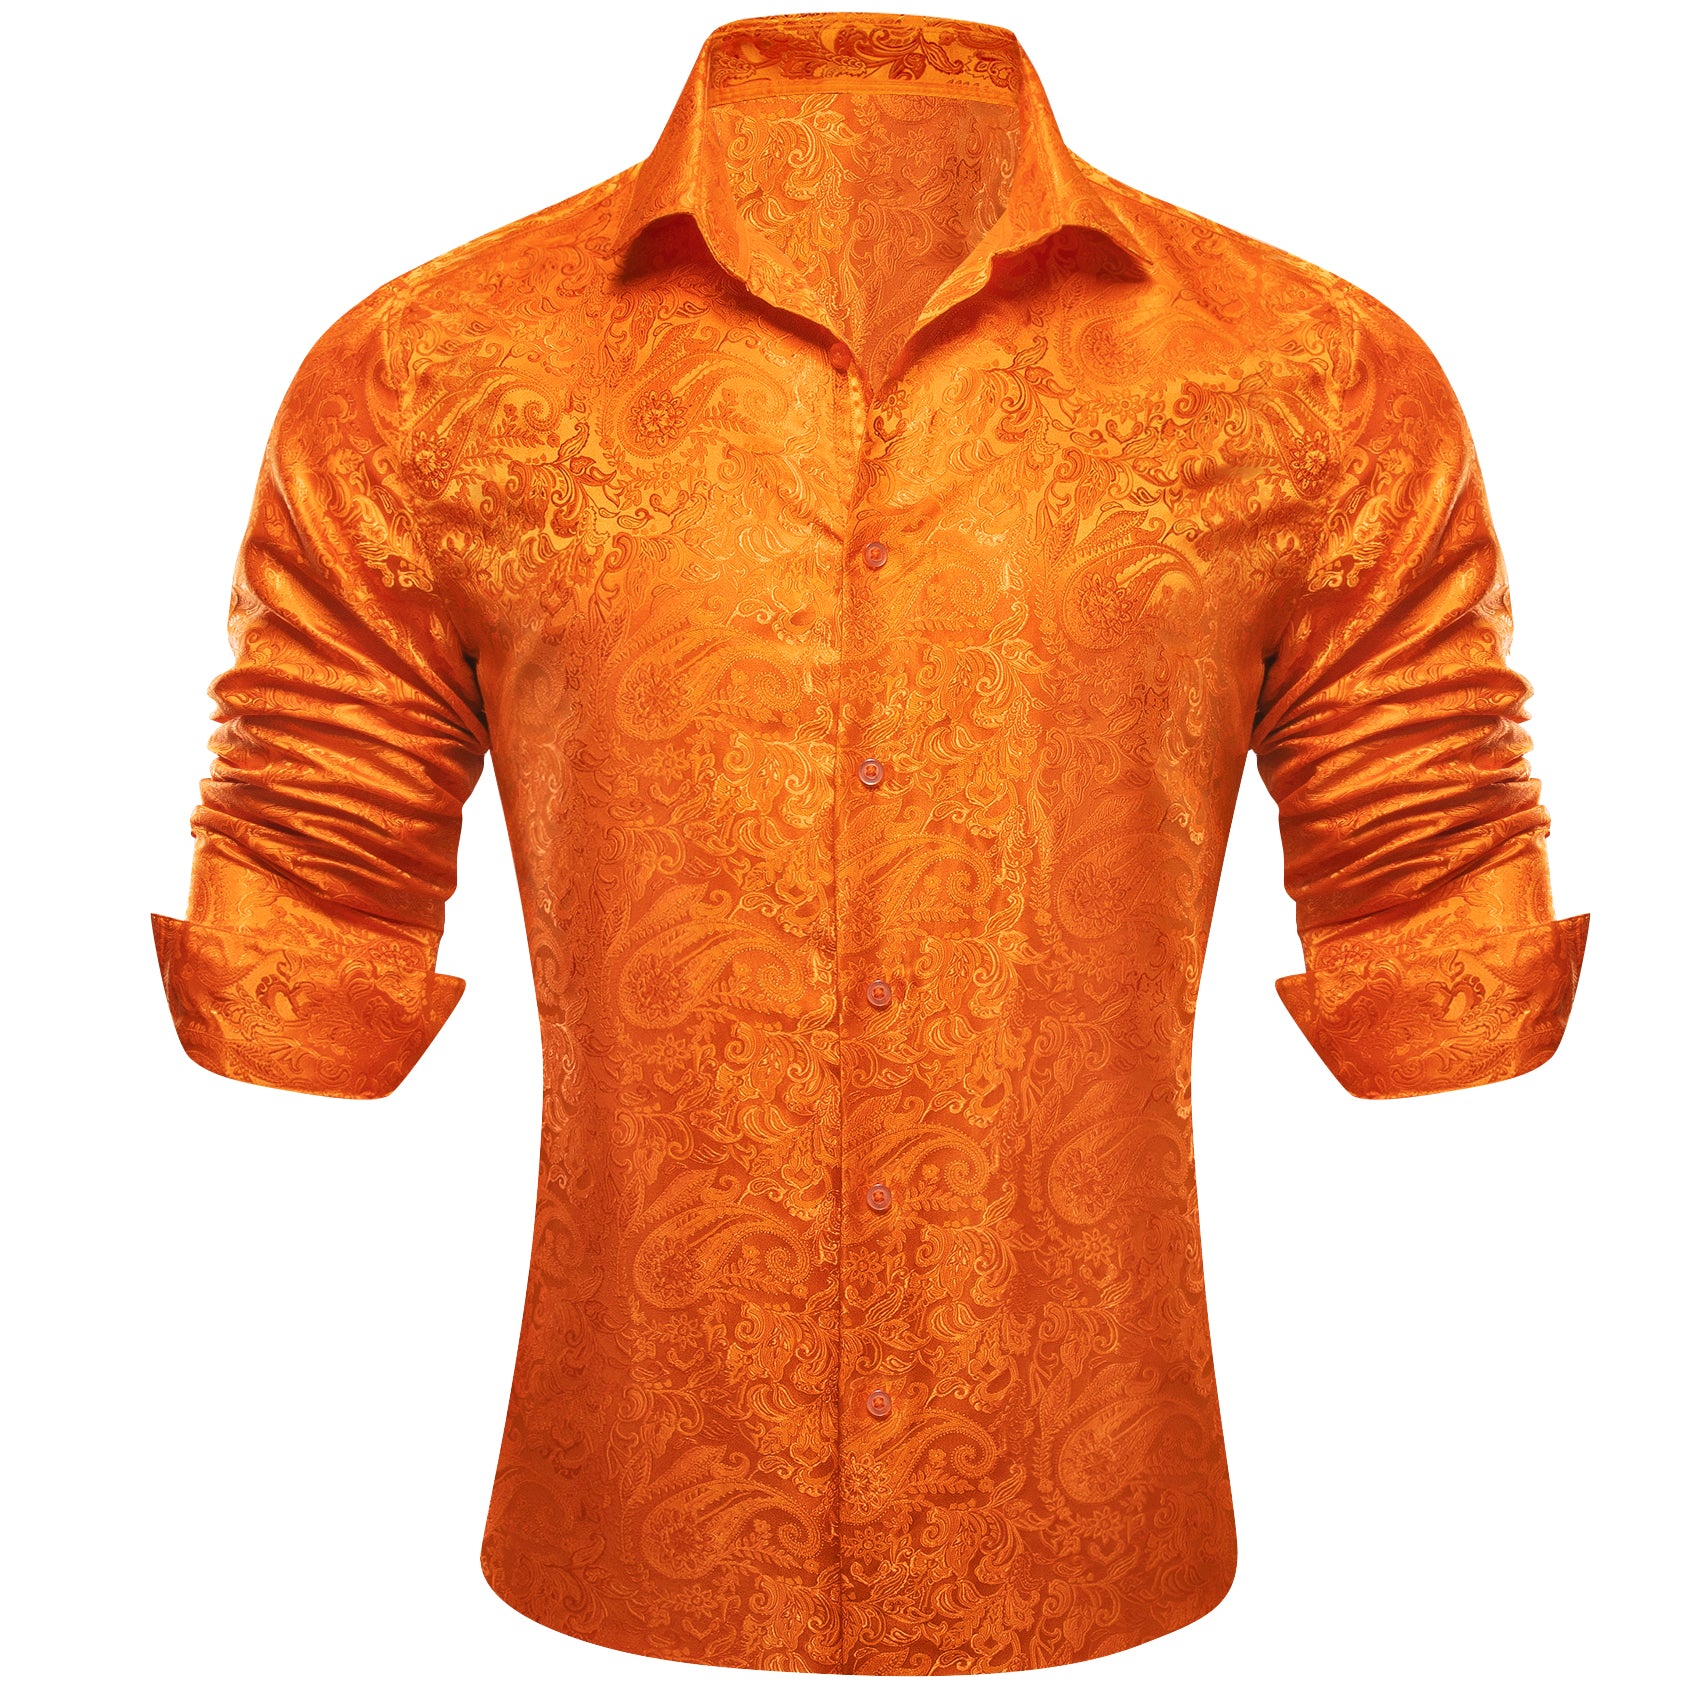 bottom down shirt Orange button up shirt long sleeve 